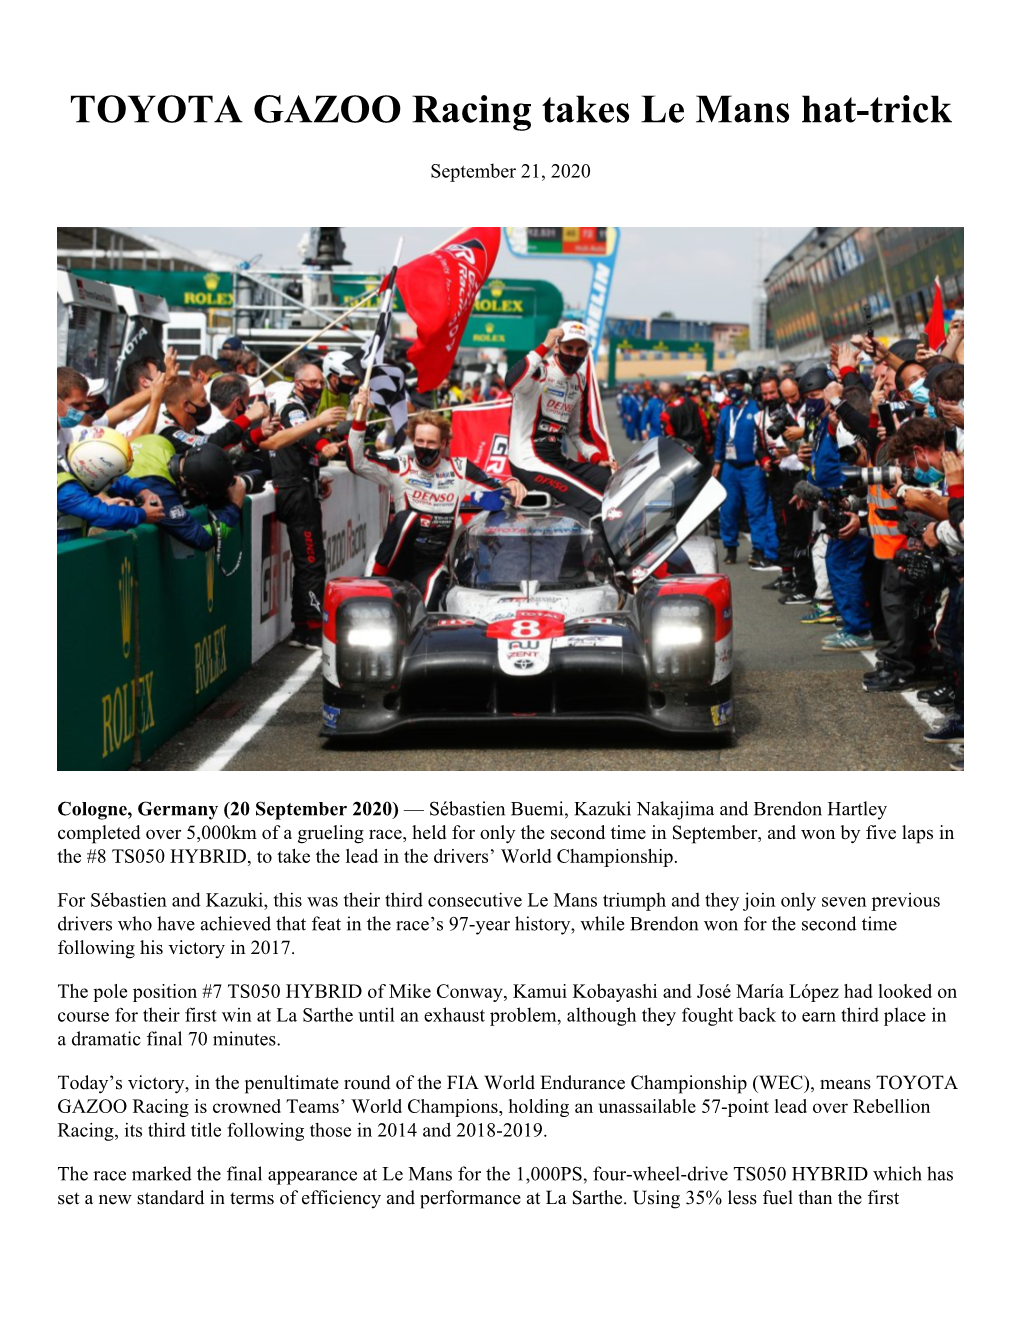 TOYOTA GAZOO Racing Takes Le Mans Hat-Trick